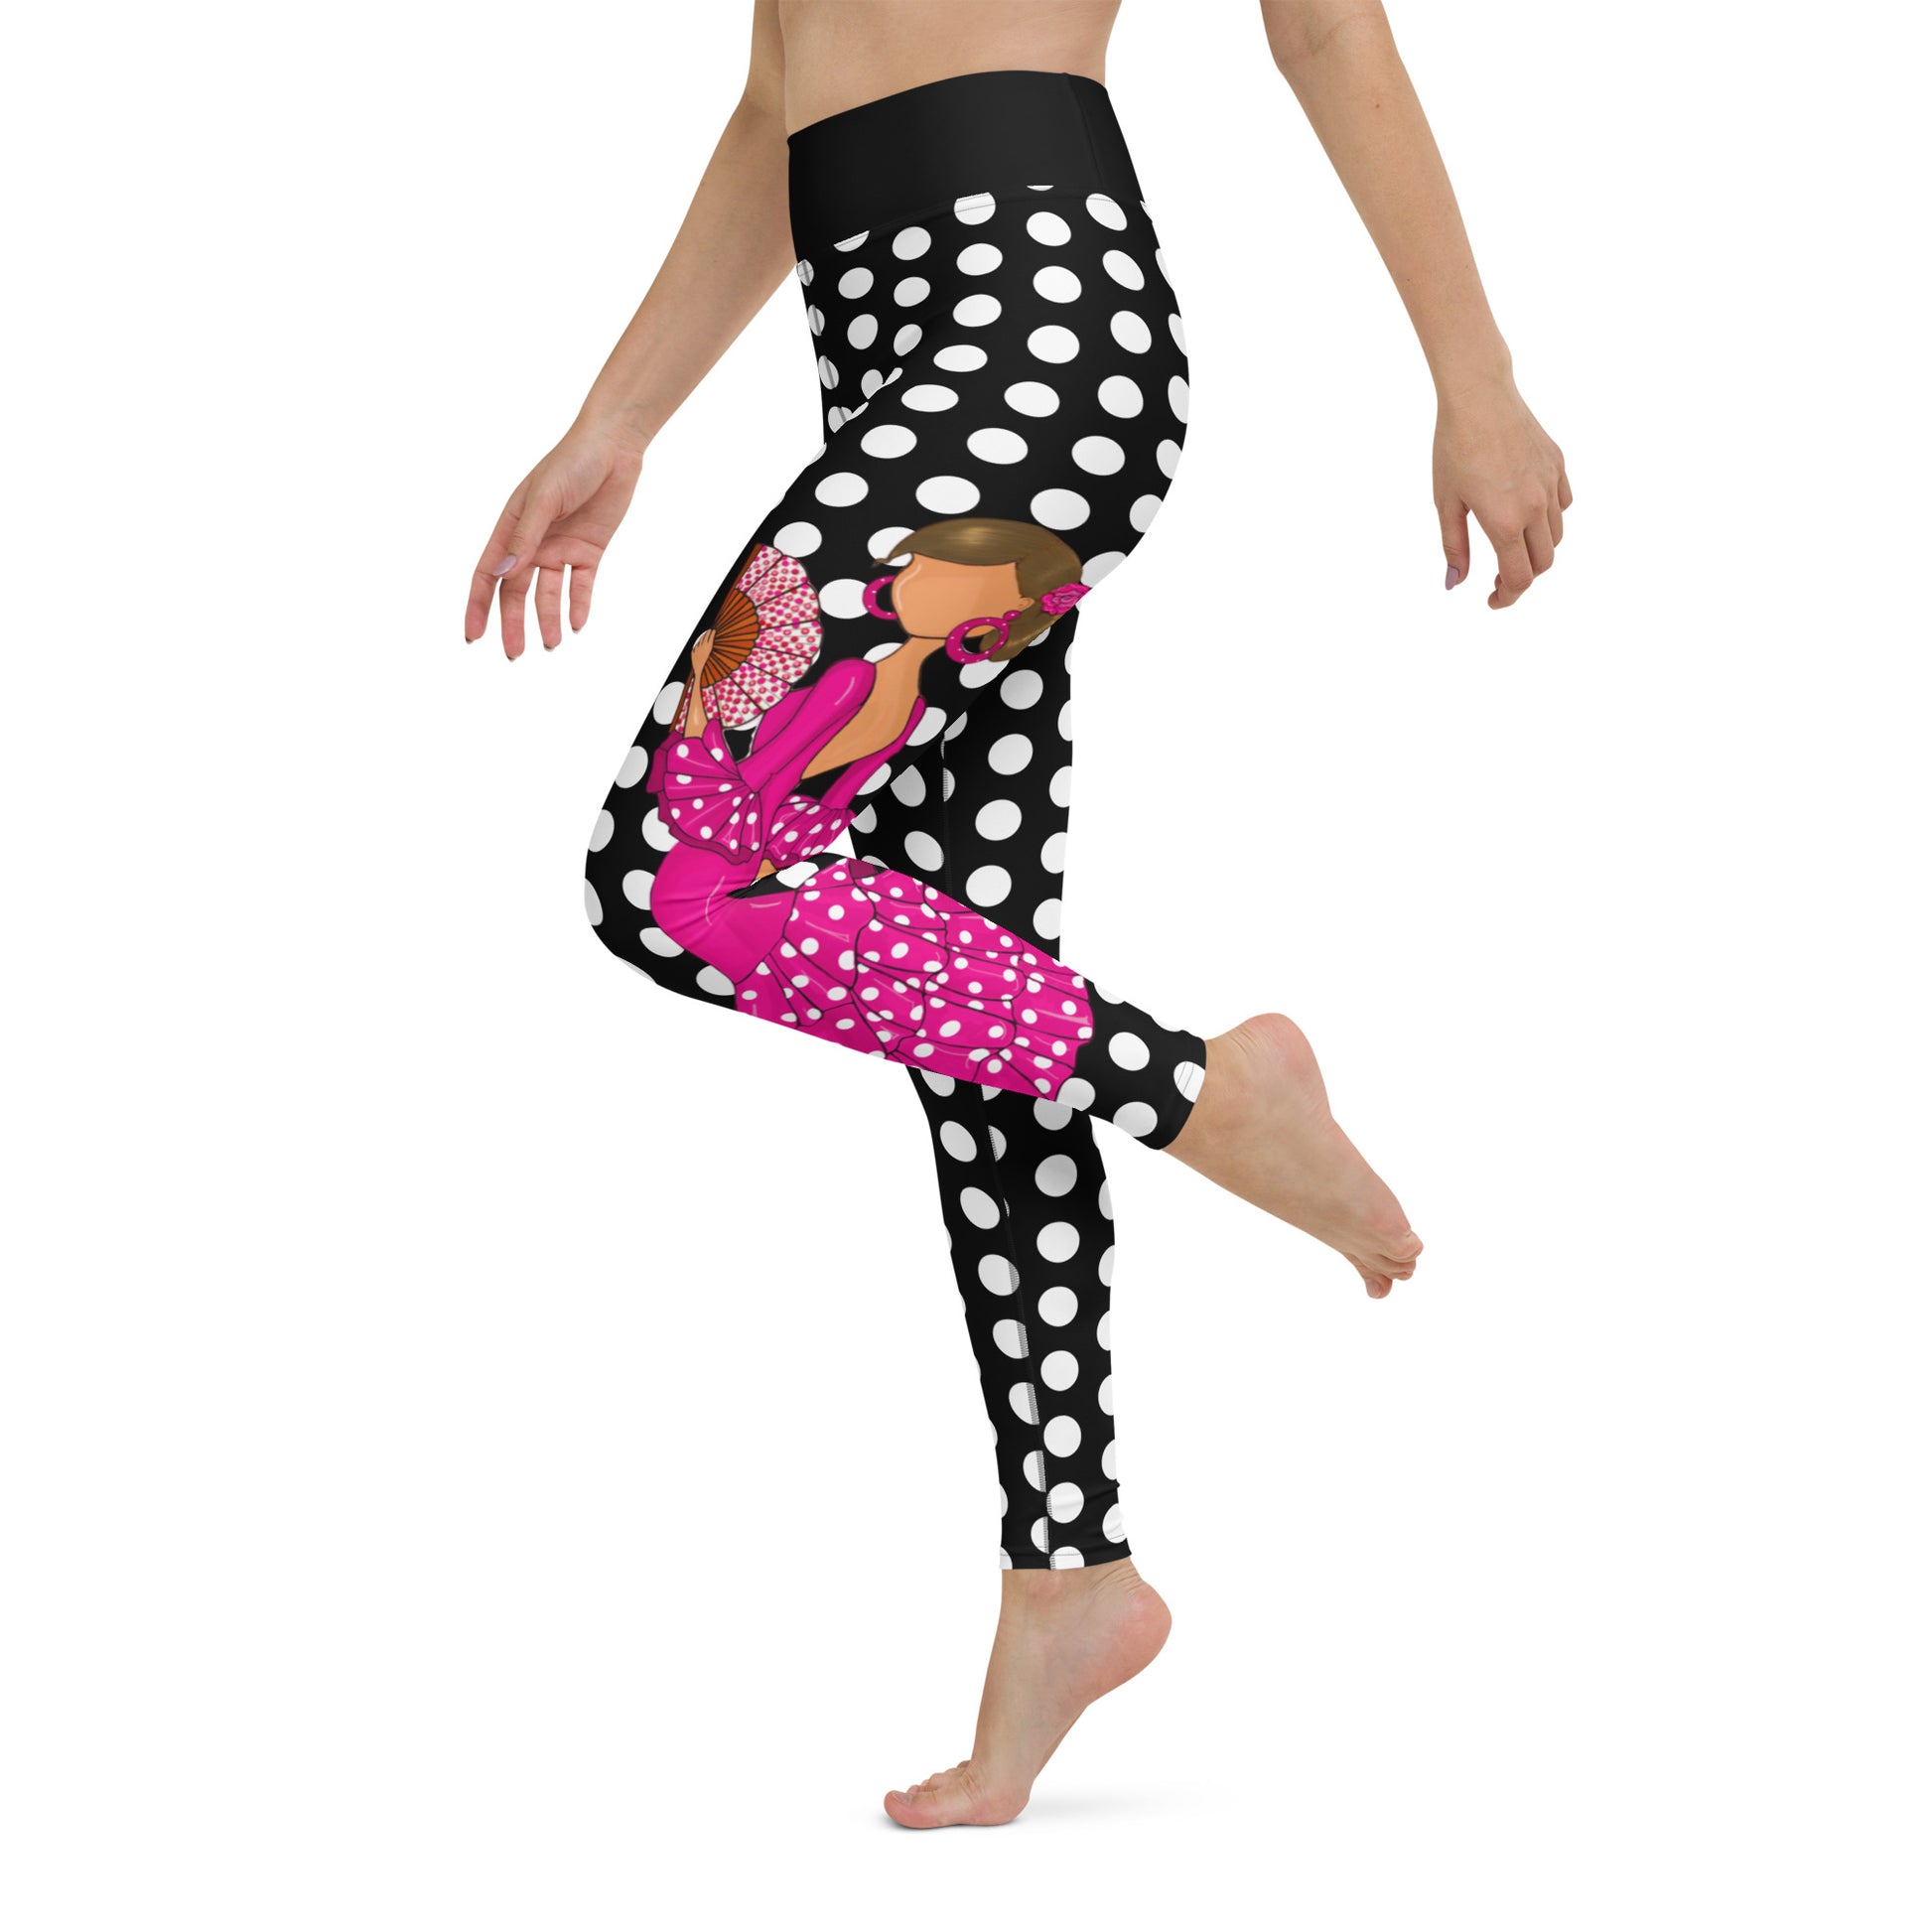 a woman in black and white polka dot leggings